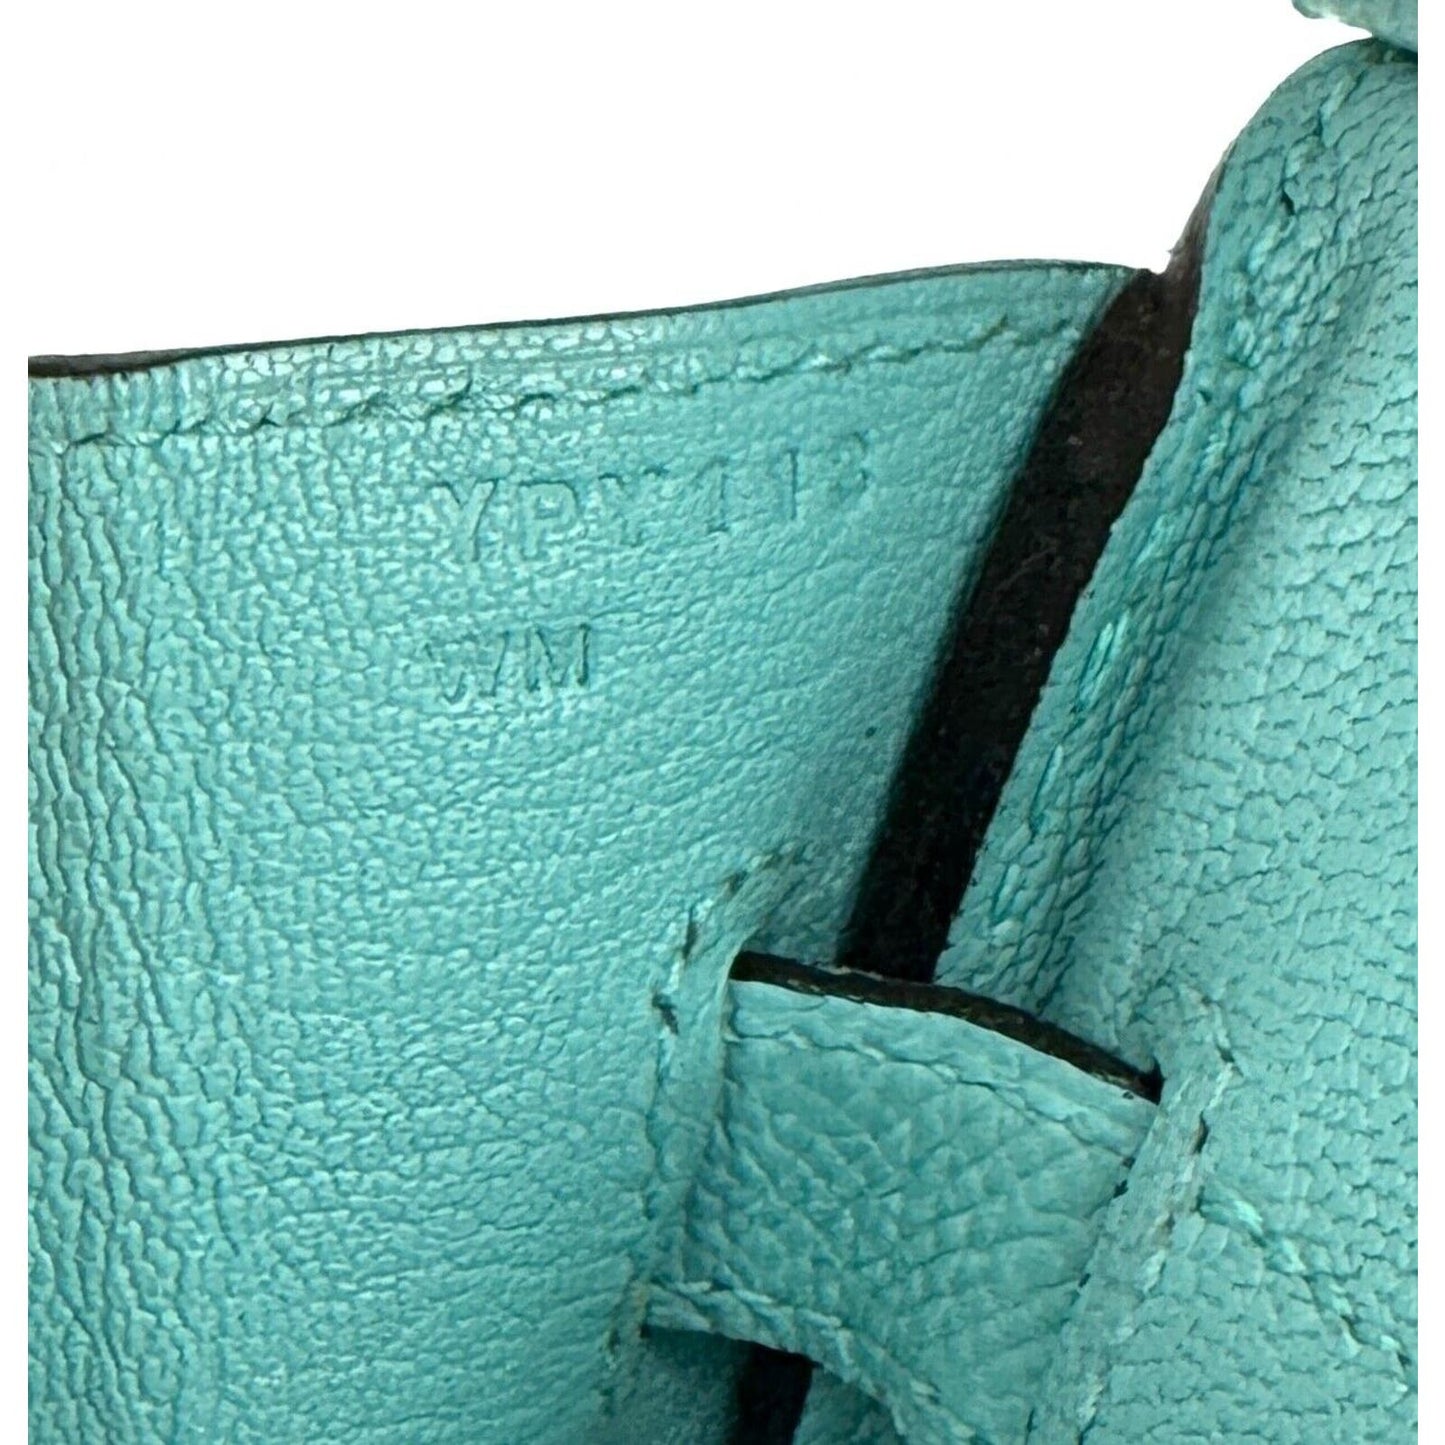 Hermes Birkin 30 Blue Atoll Tiffany Blue Epsom Leather Gold Hardware 2020